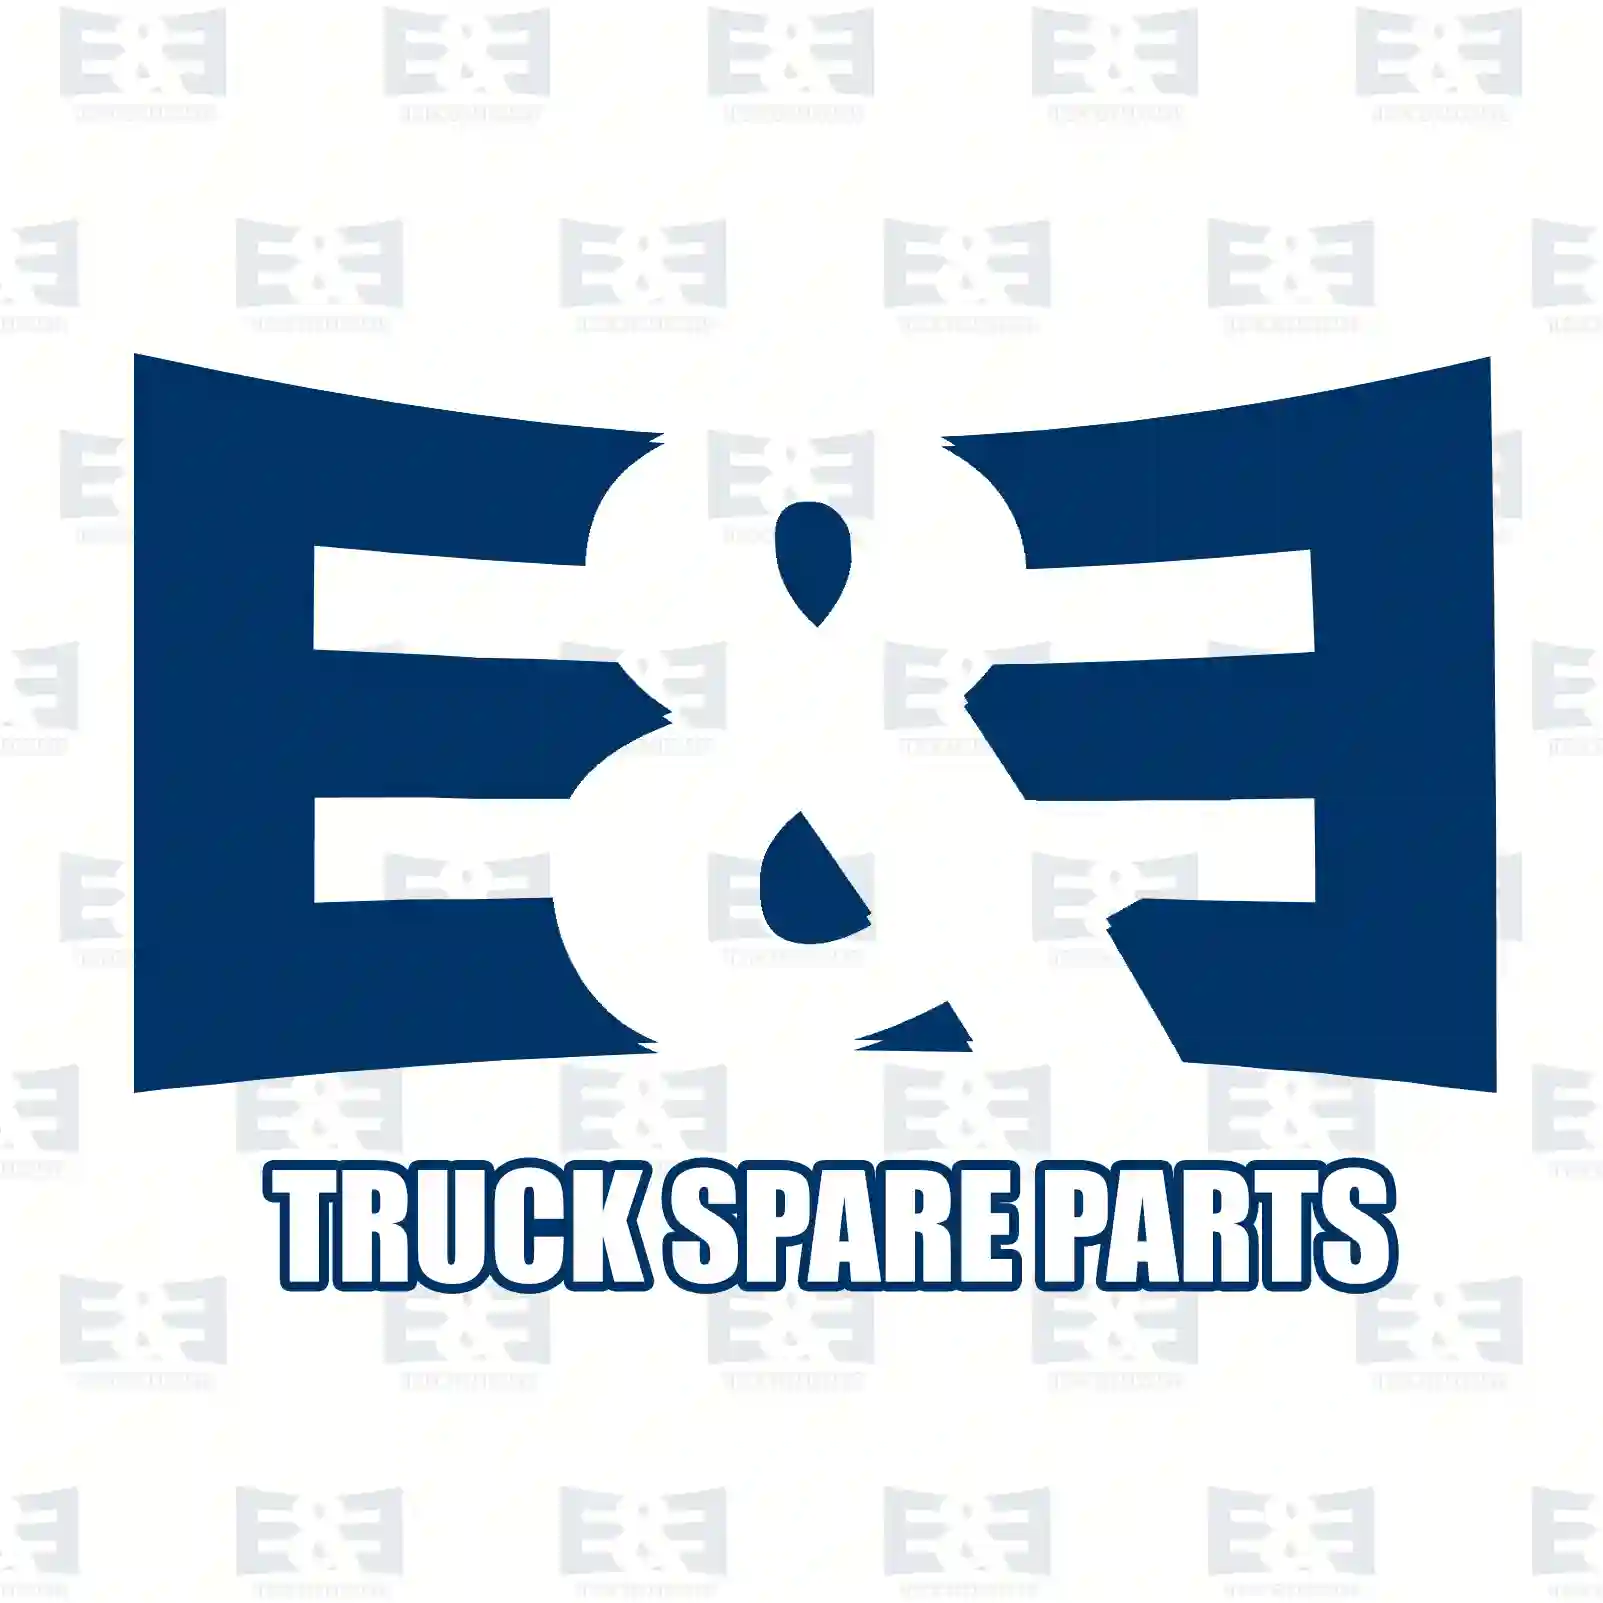 Drum brake lining kit, 2E2294332, 00998791, 01901906, 01902185, 01903480, 02980299, 02991906, 2991906, 42014266, 503471109, 271102, 2711026, 271249, 2712495 ||  2E2294332 E&E Truck Spare Parts | Truck Spare Parts, Auotomotive Spare Parts Drum brake lining kit, 2E2294332, 00998791, 01901906, 01902185, 01903480, 02980299, 02991906, 2991906, 42014266, 503471109, 271102, 2711026, 271249, 2712495 ||  2E2294332 E&E Truck Spare Parts | Truck Spare Parts, Auotomotive Spare Parts